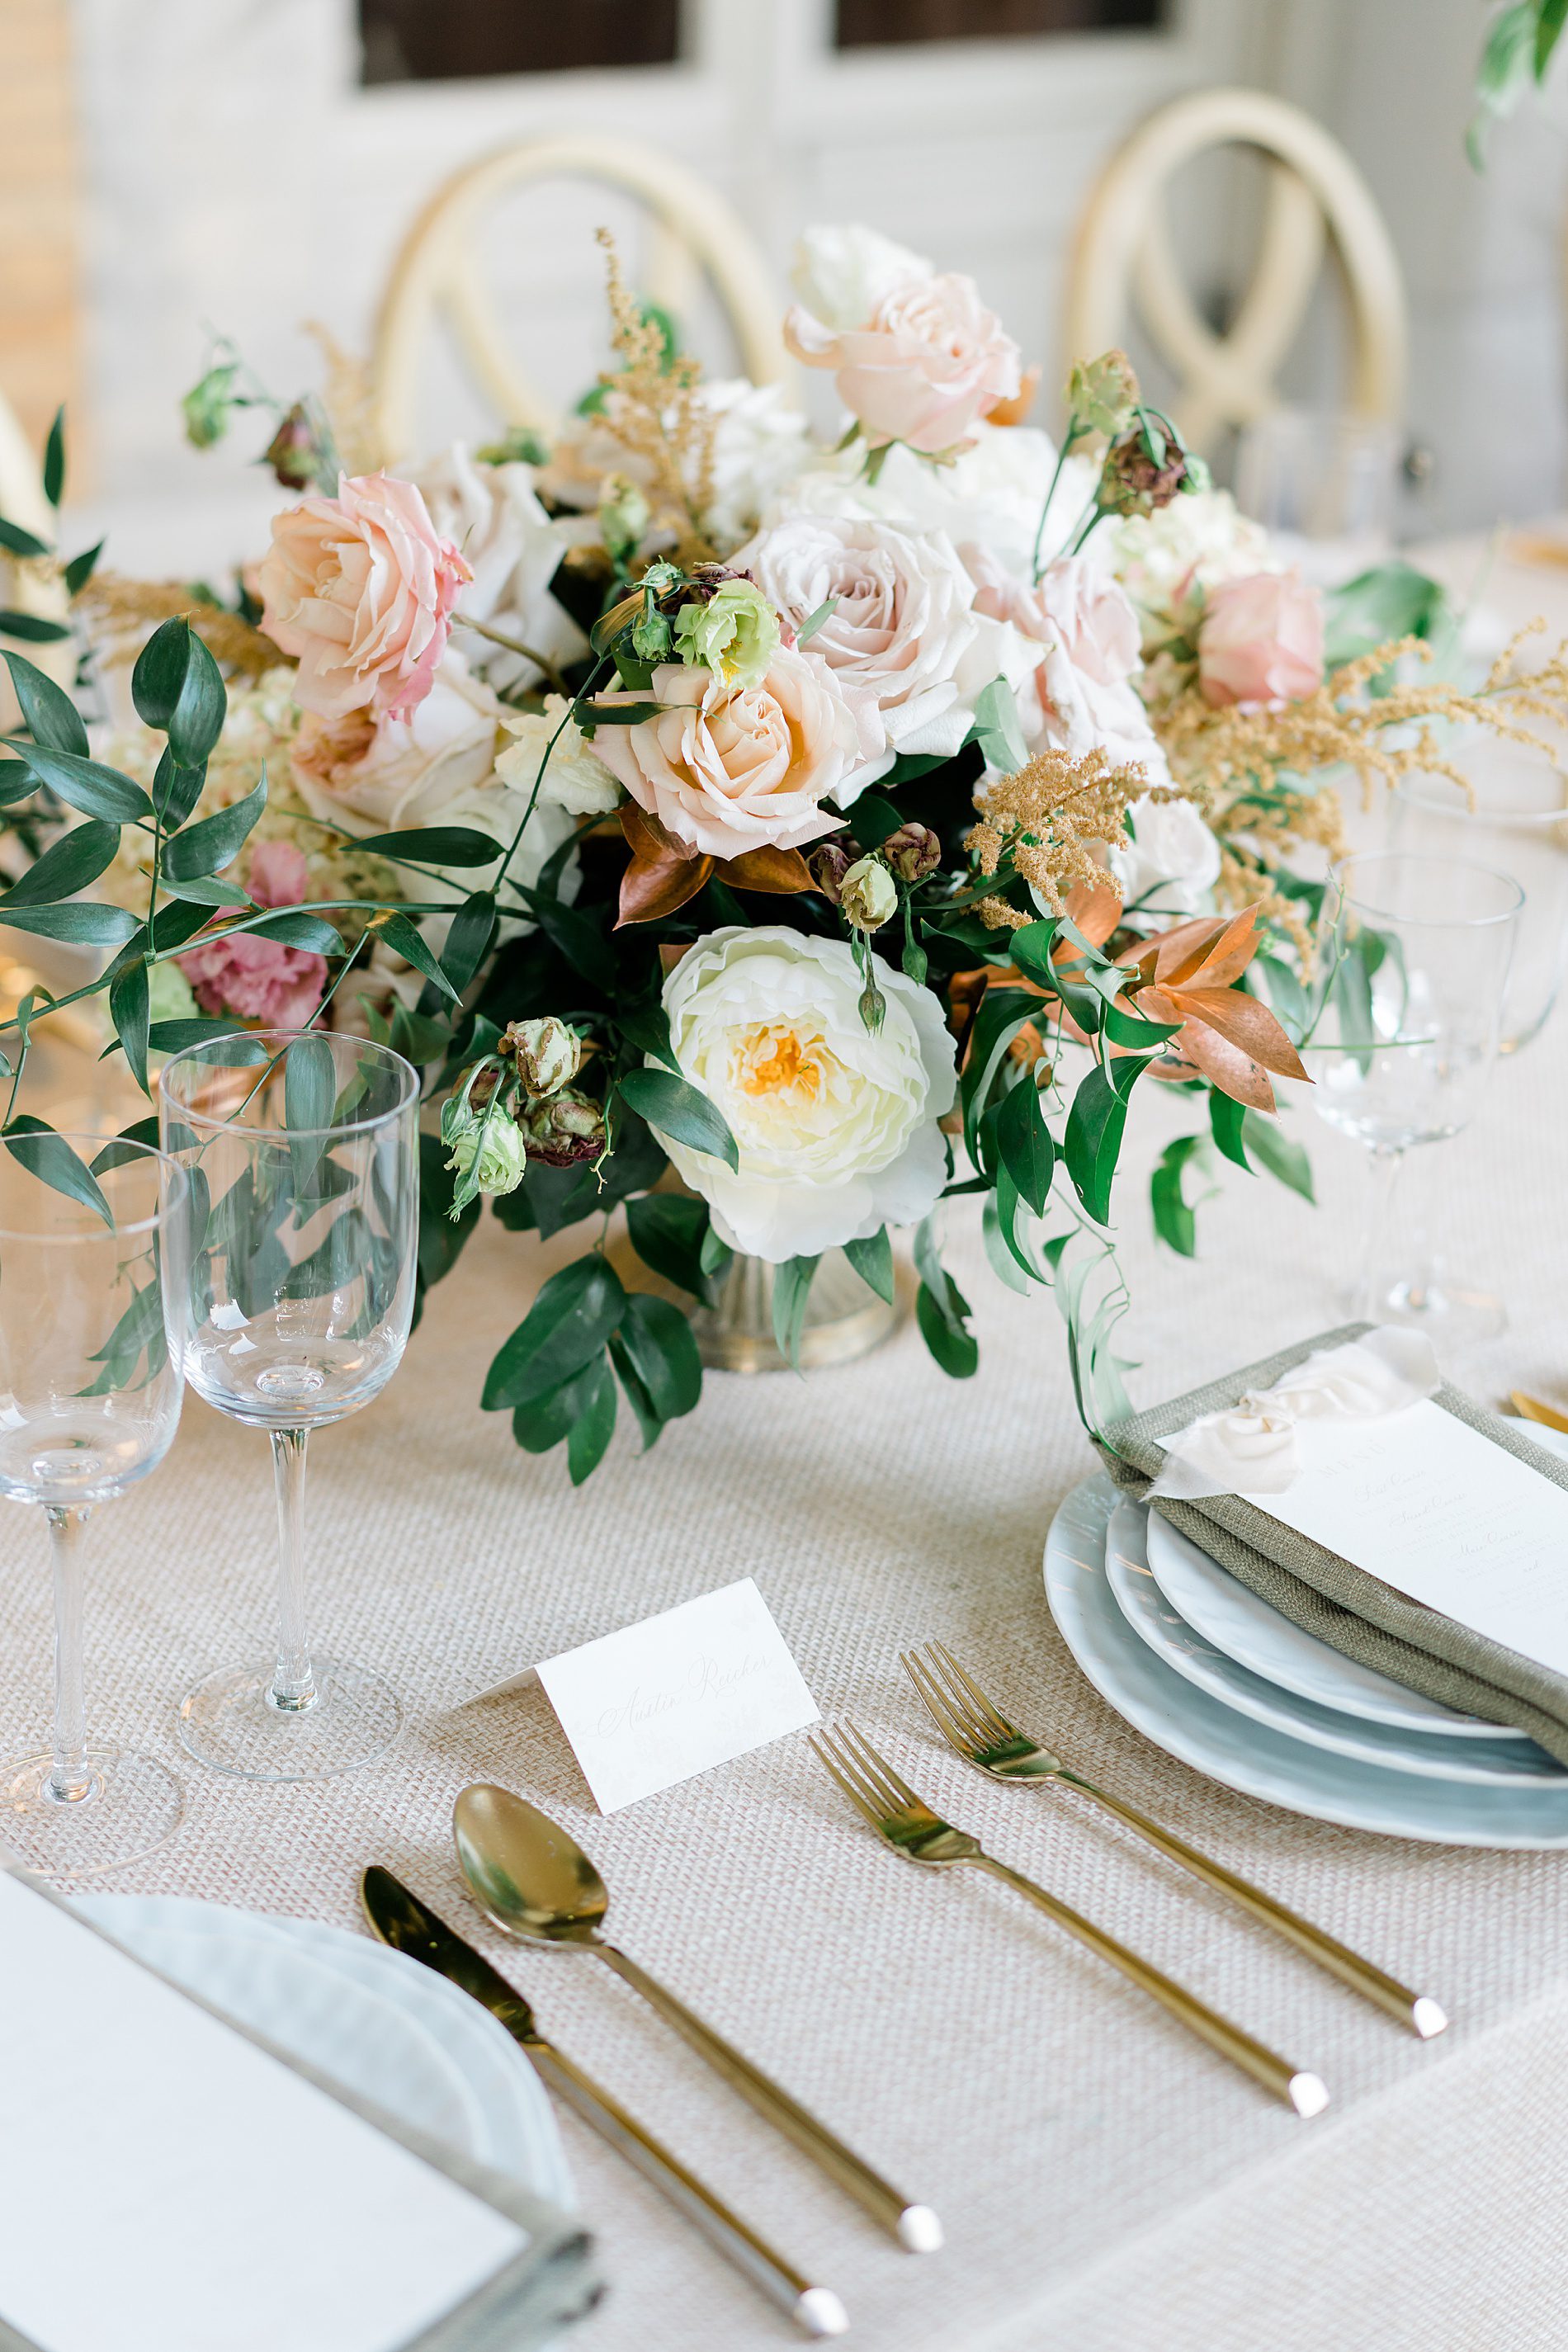 table setting at wedding